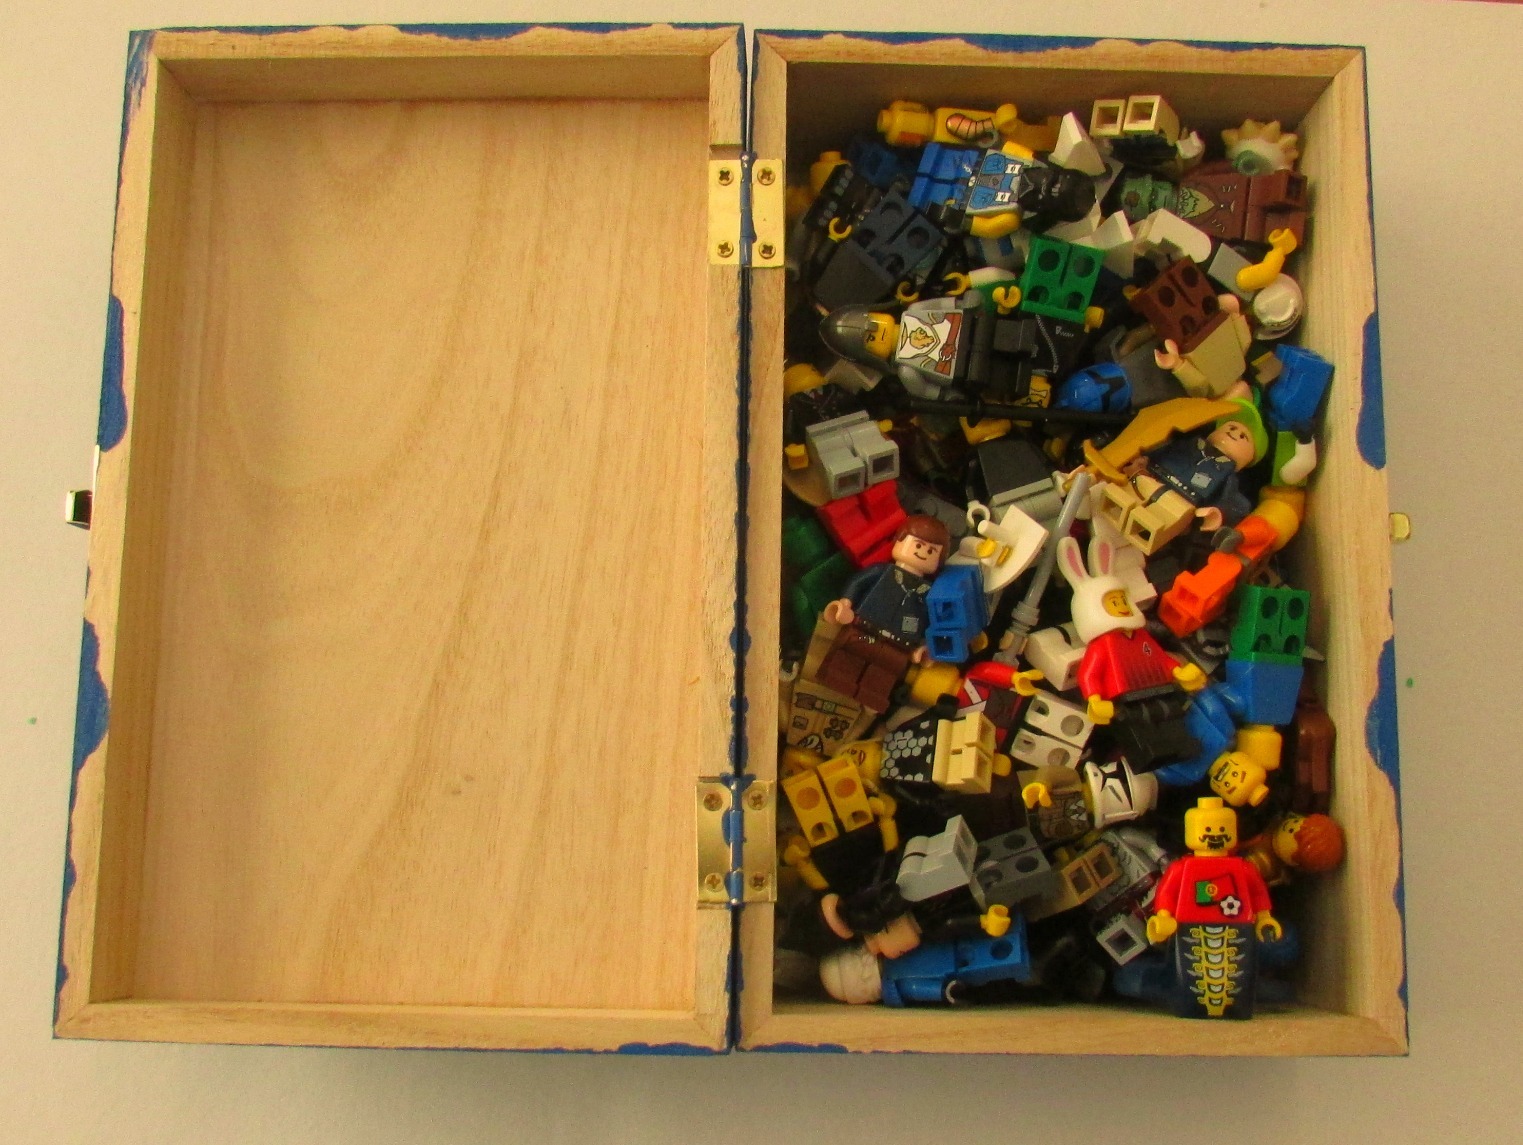 DIY Lego Travel Box